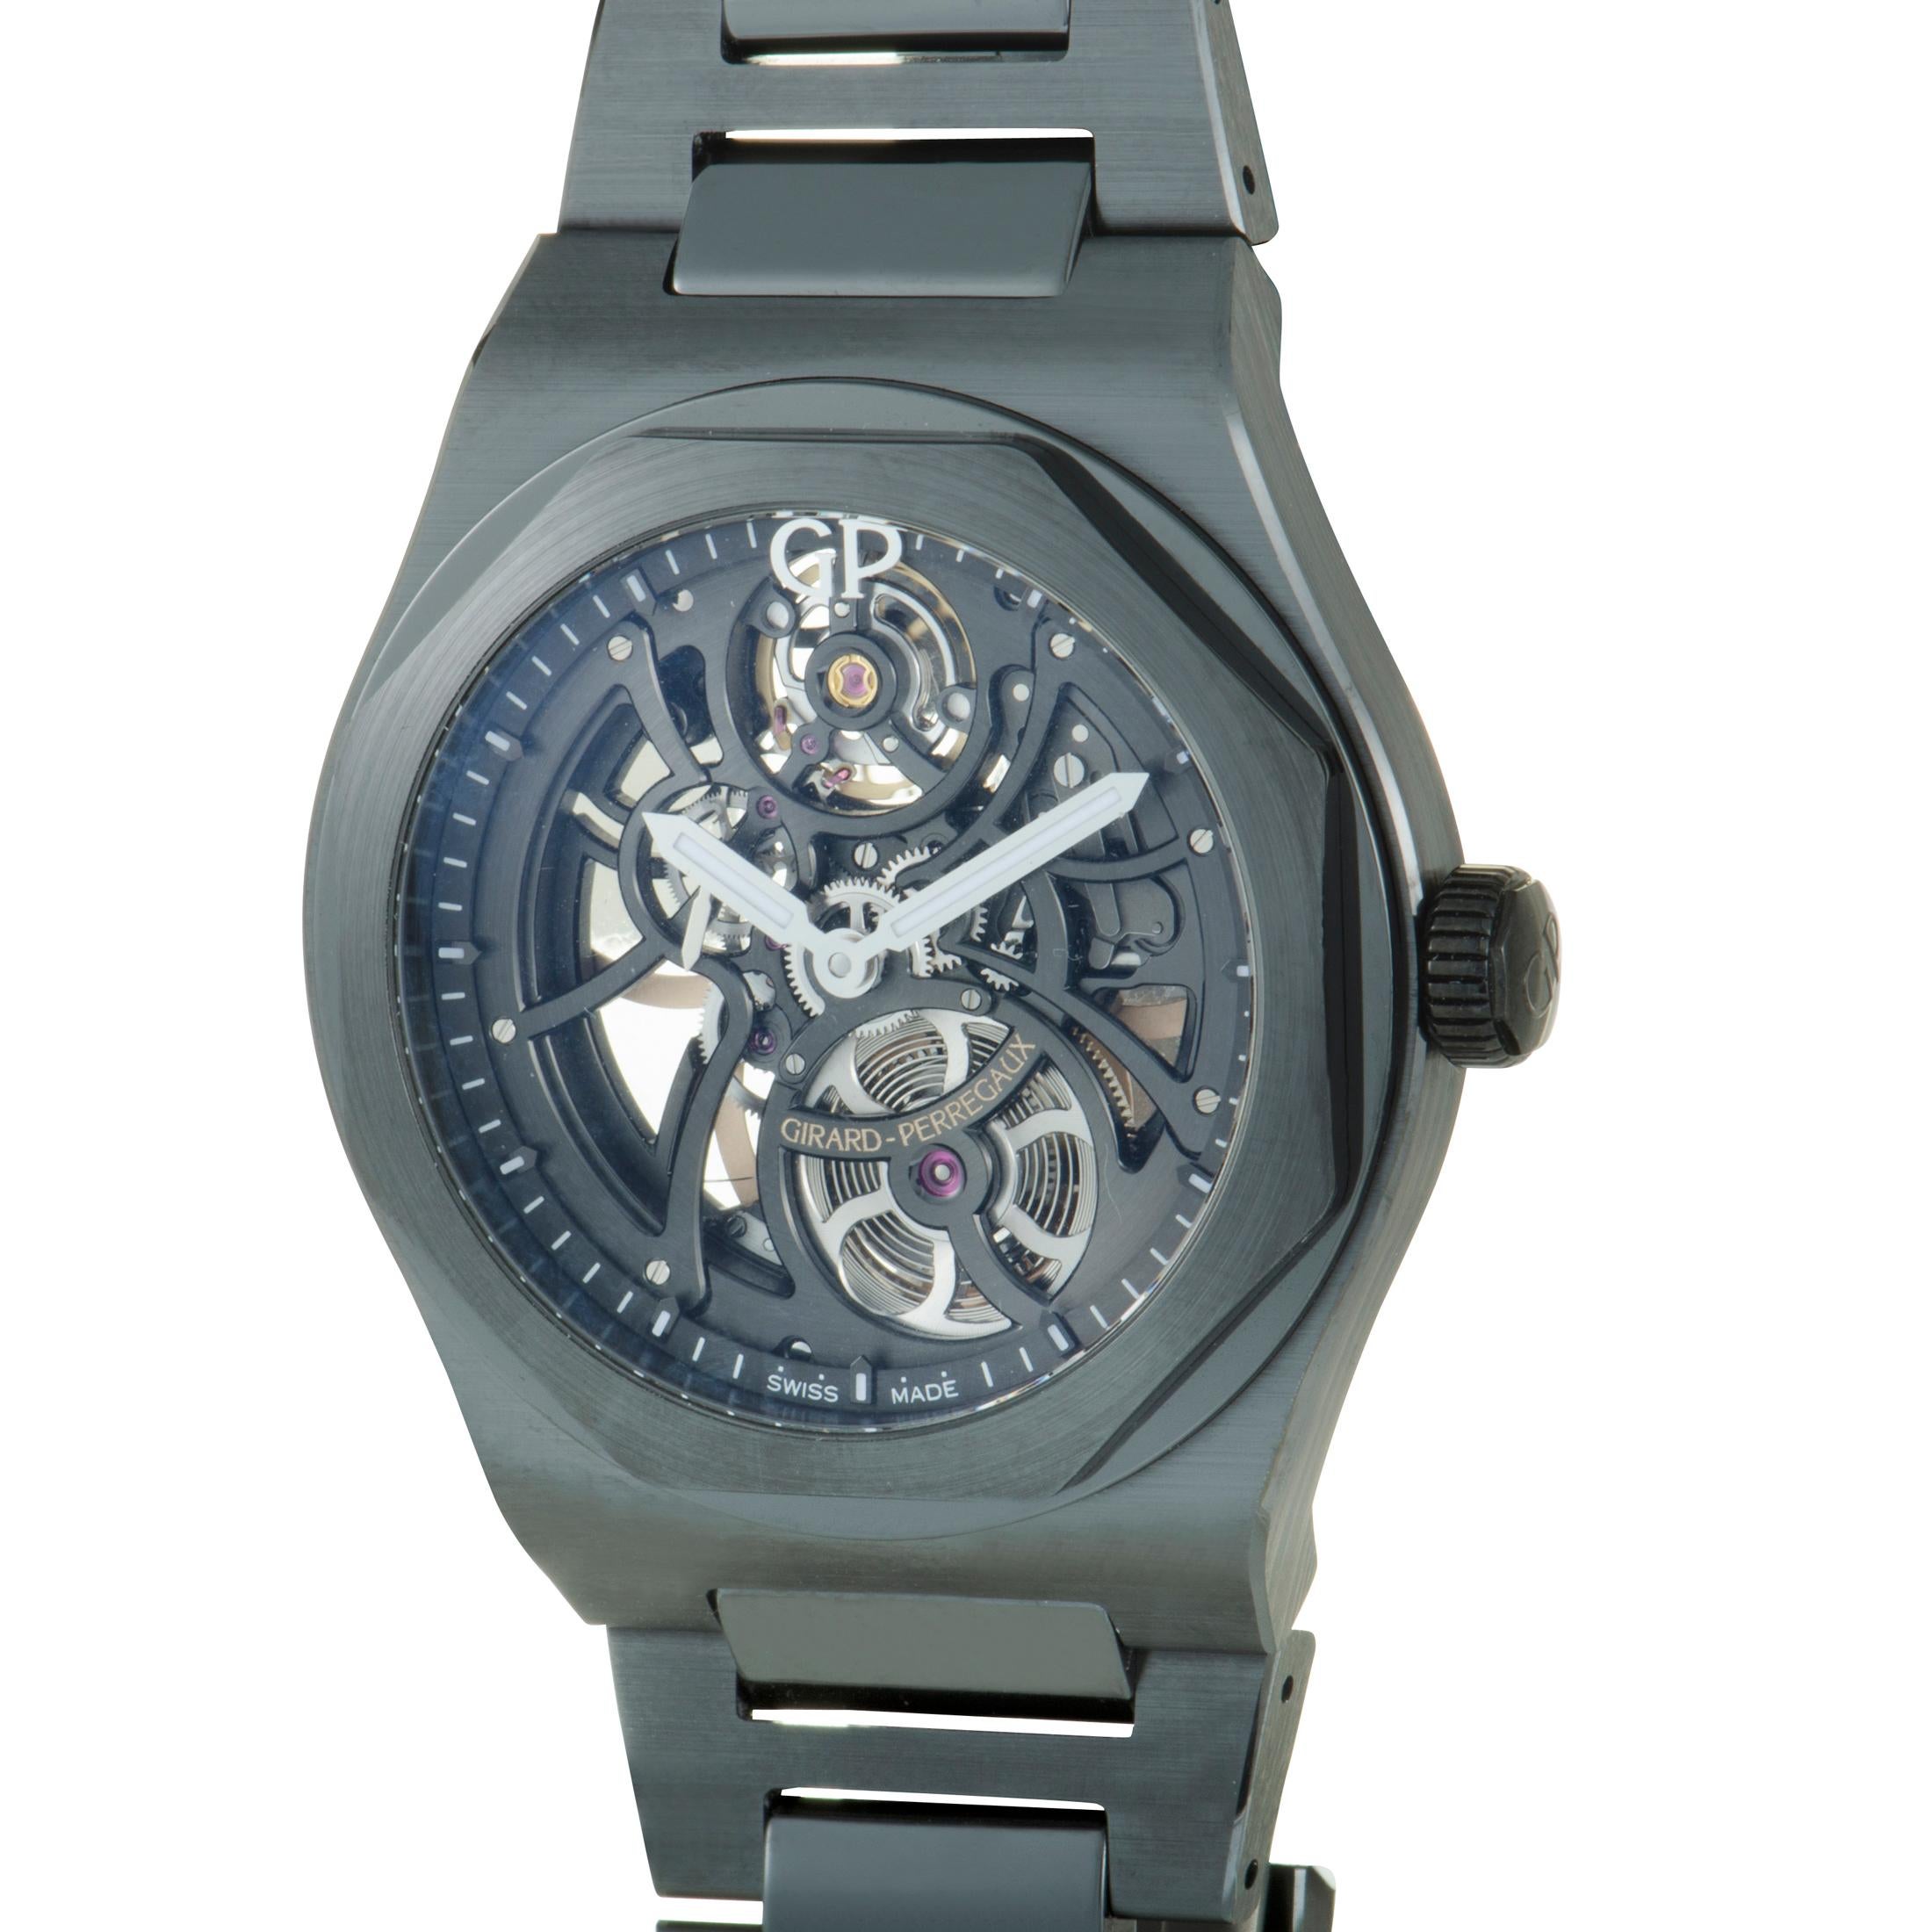 Girard Perregaux Laureato Skeleton Ceramic Watch 81015-32-001-32A

Retail Price $38,400